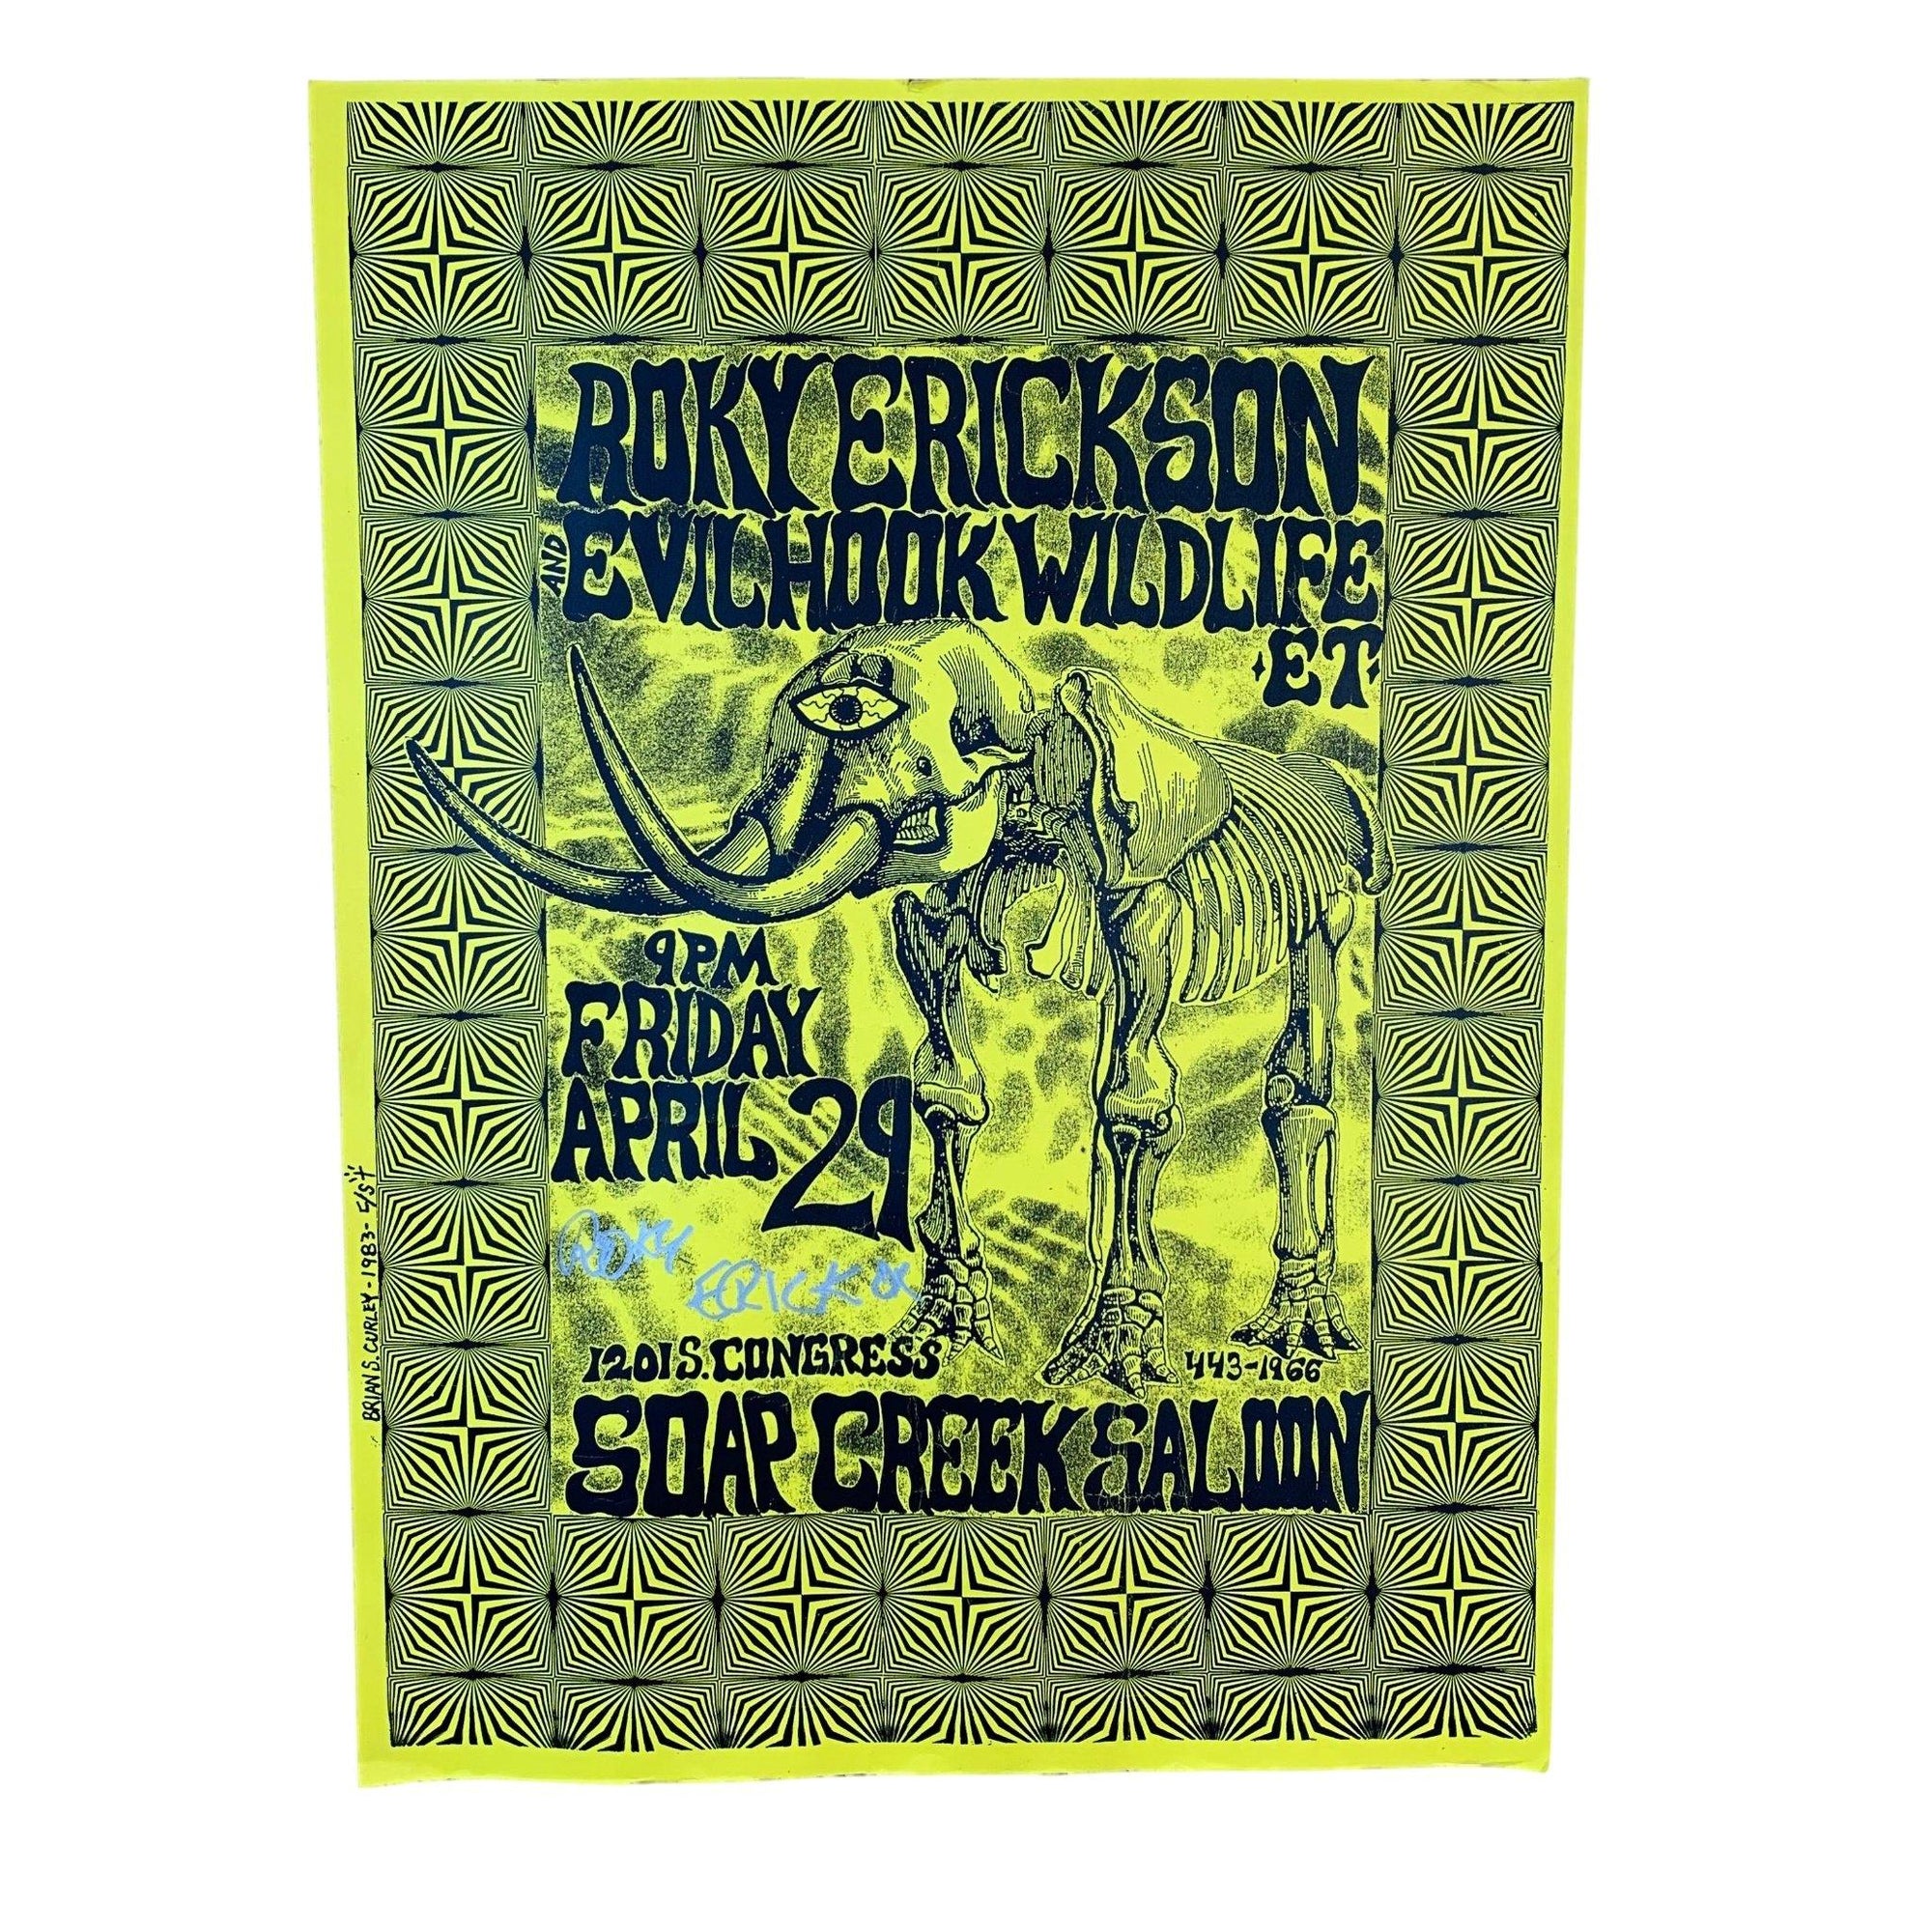 Vintage Roky Erickson & Evil Hook Wildlife "Austin 1983" Signed Poster - jointcustodydc